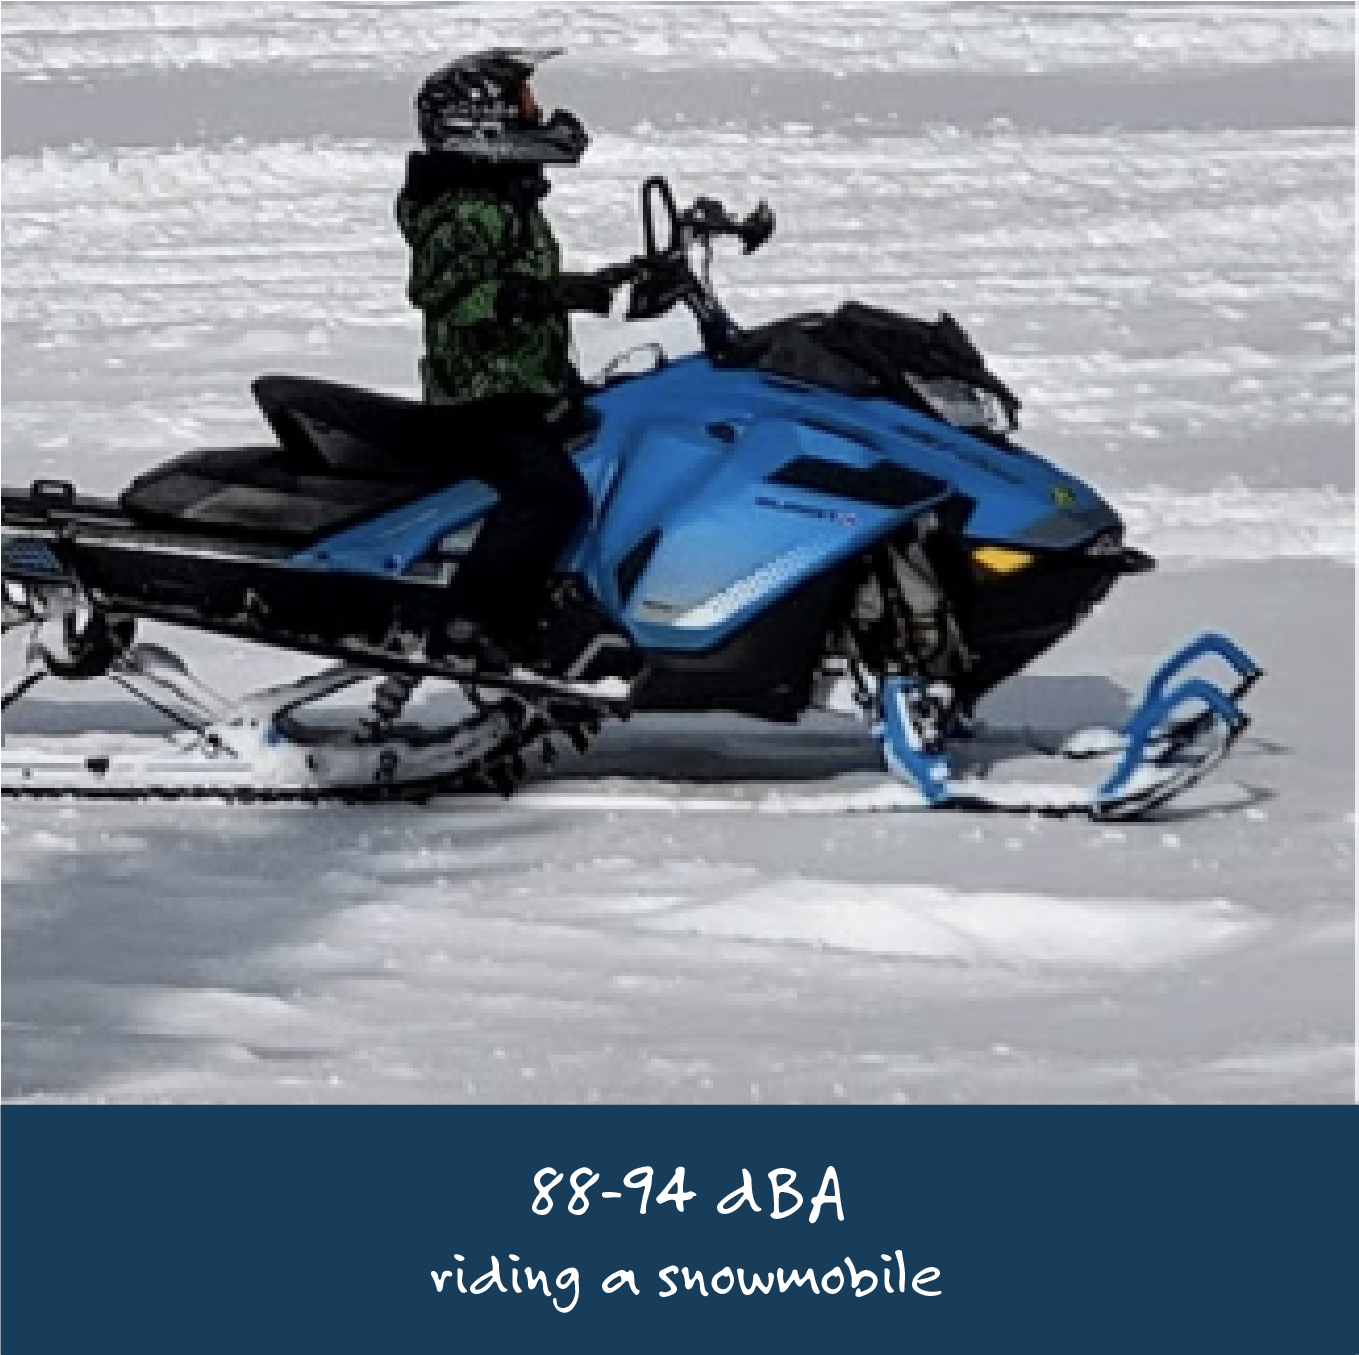 88-94 dBA: driving a snowmobile